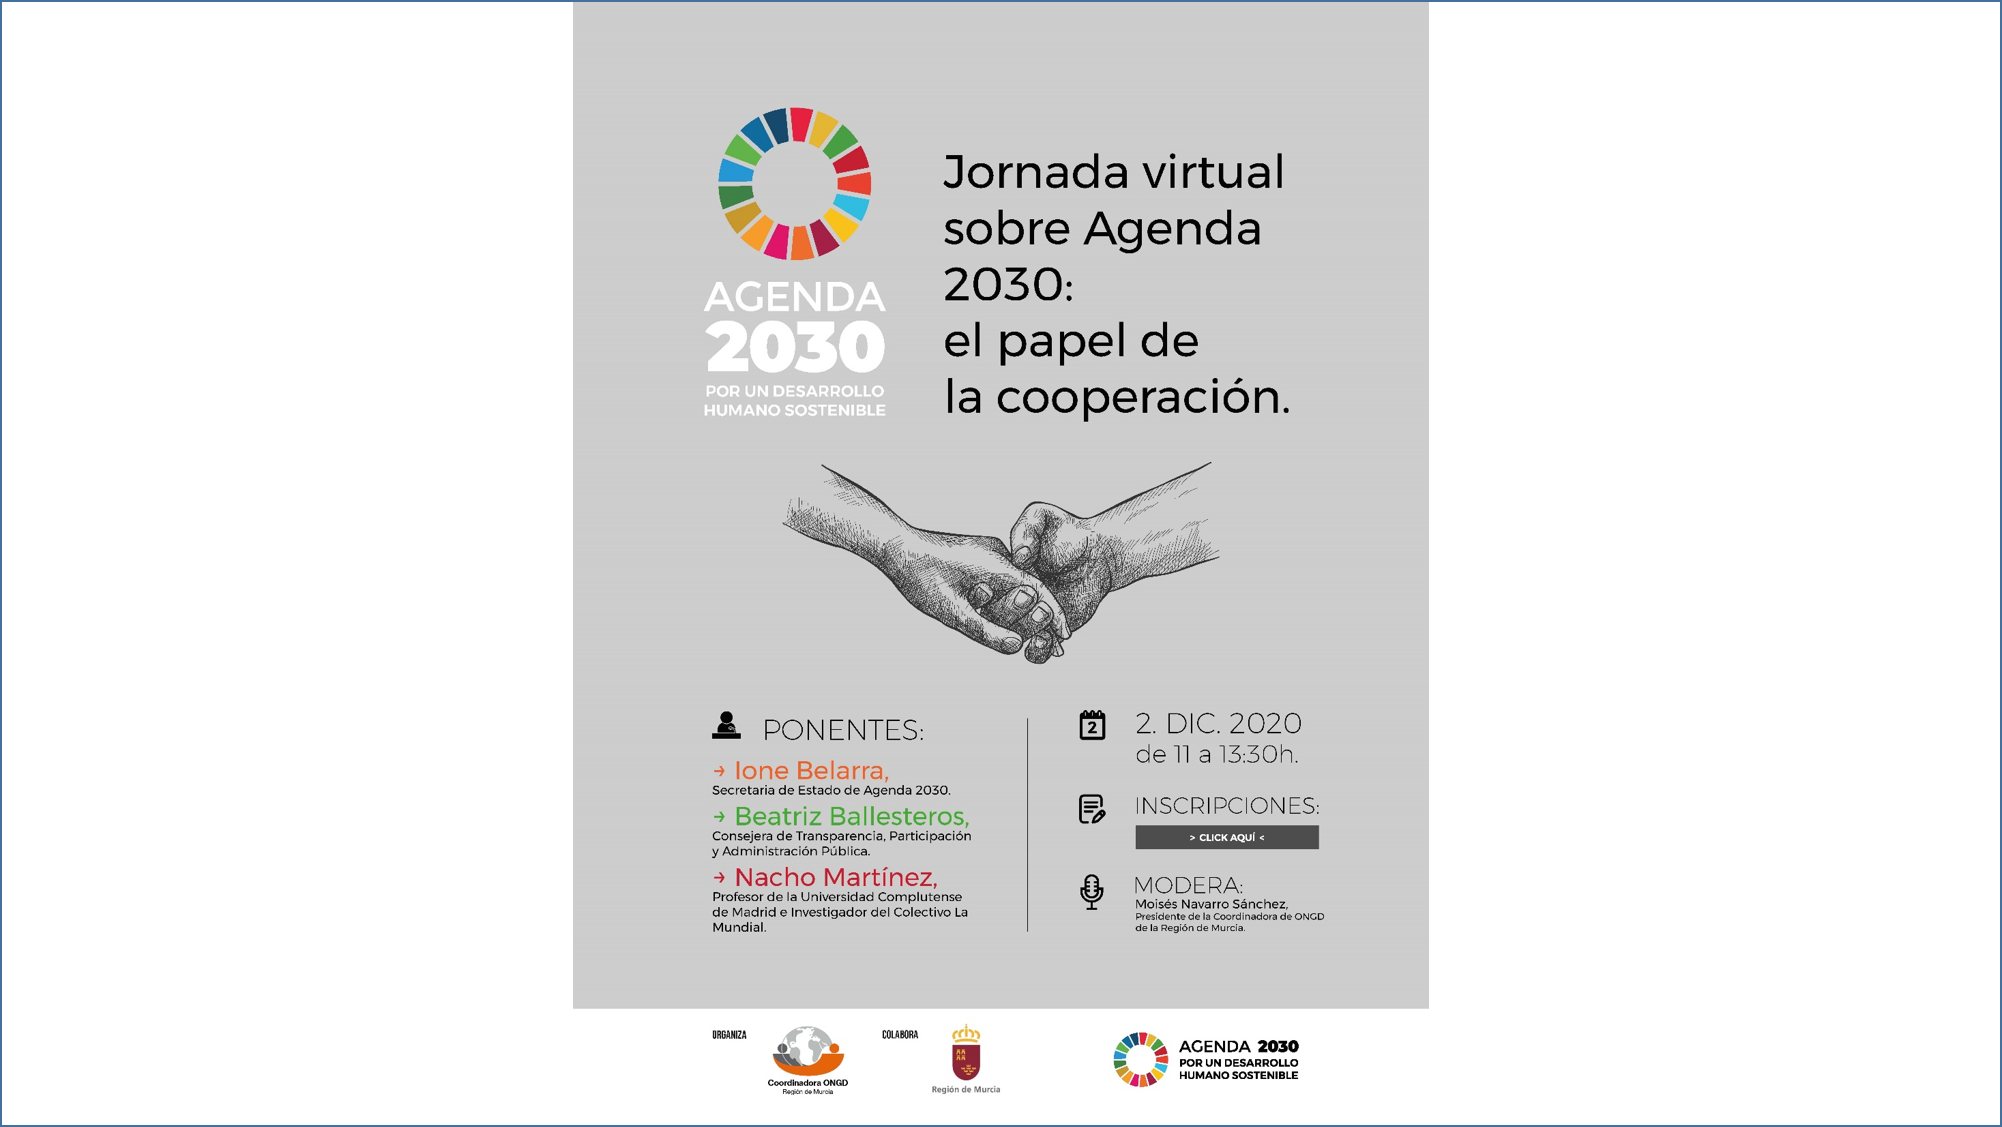 Ignacio Martinez, ponente en la Jornada Virtual Agenda 2030